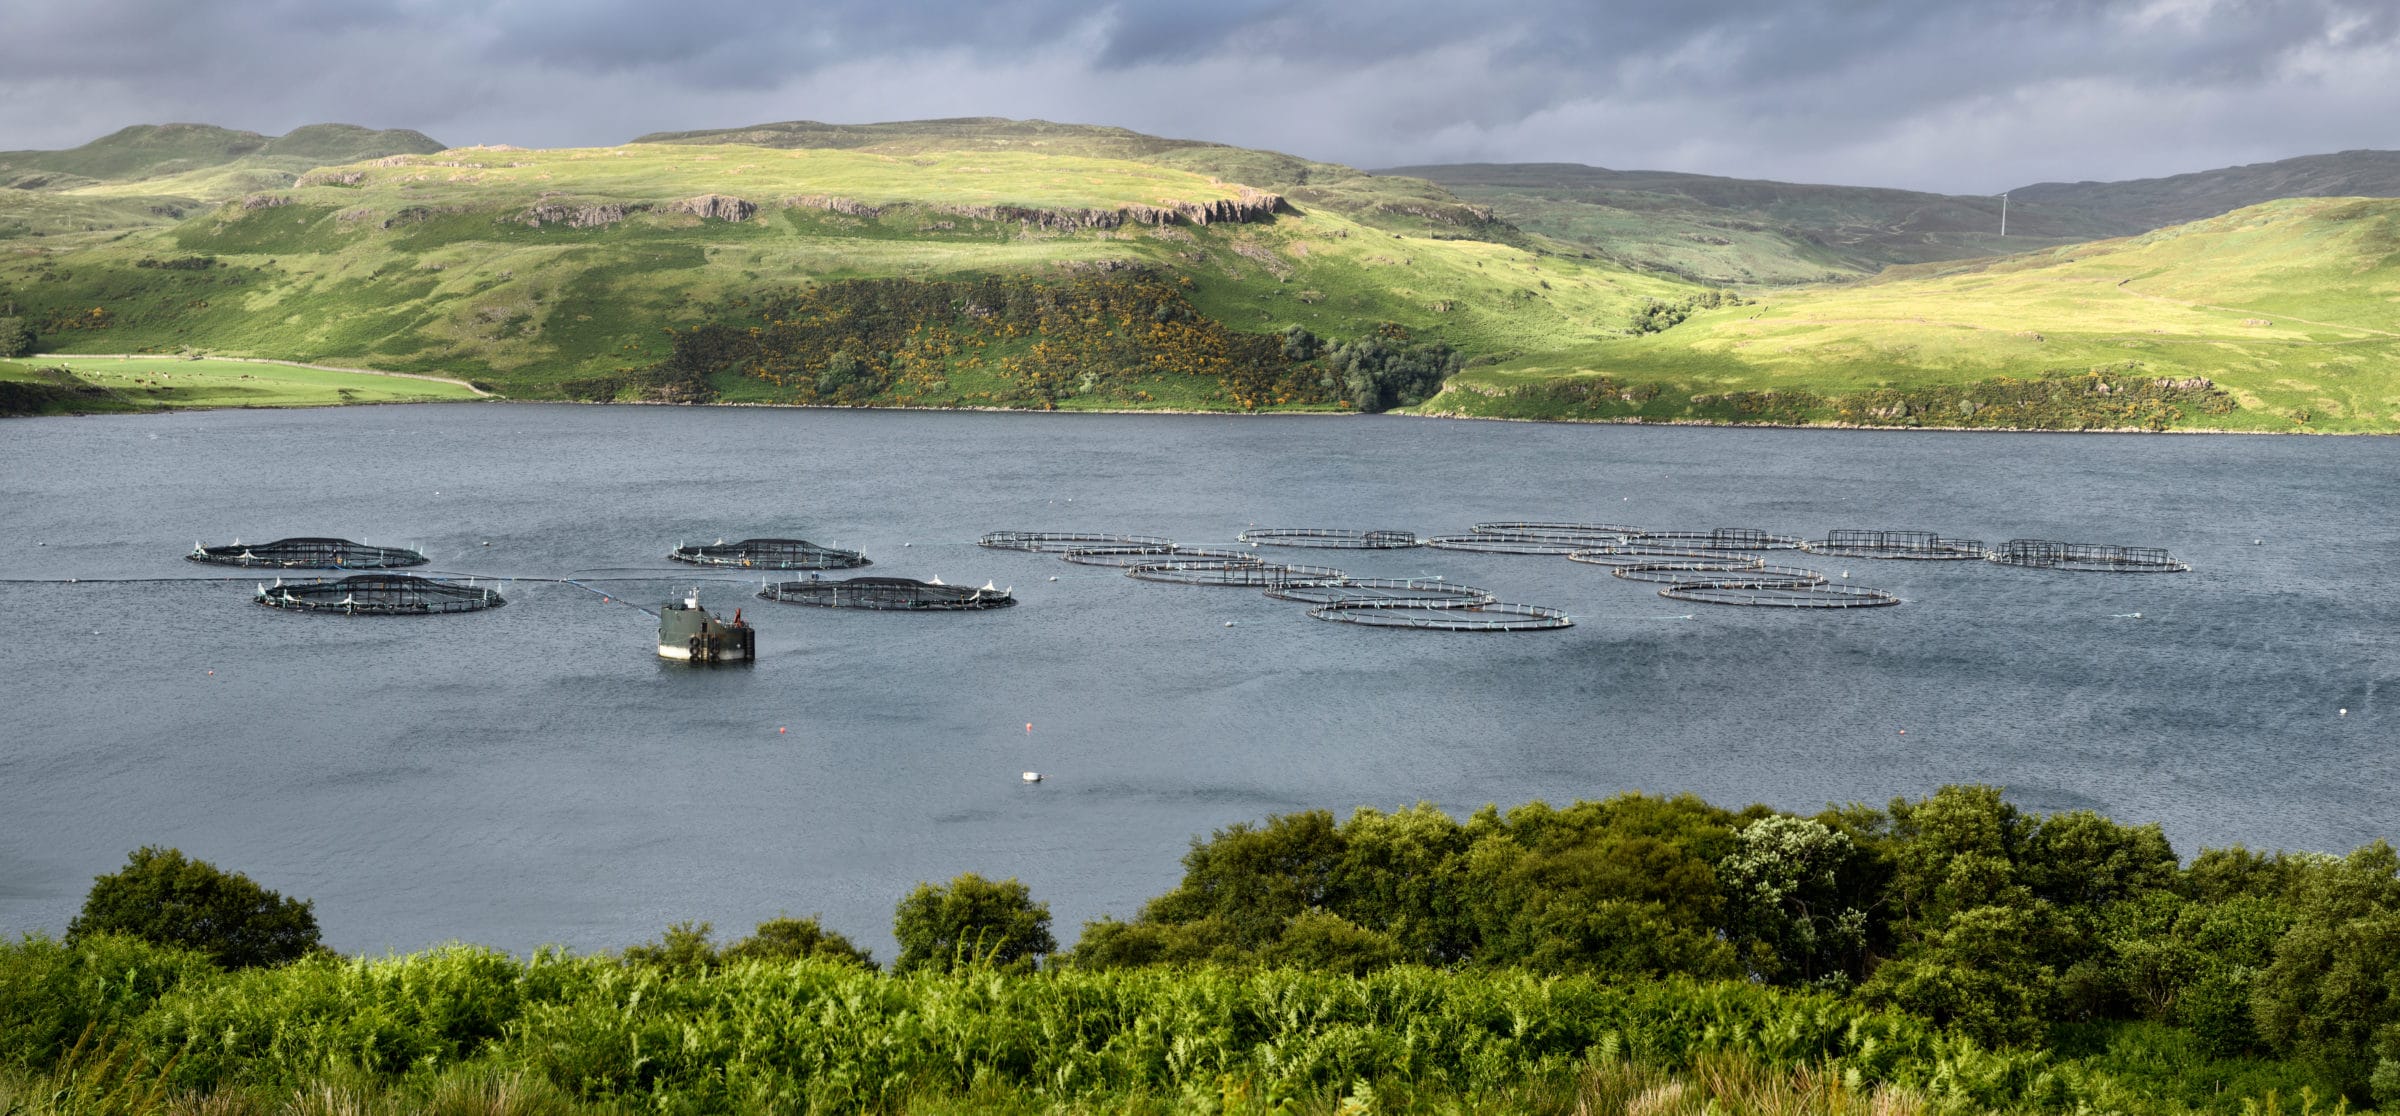 Panorama,Of,Salmon,Fish,Farm,Net,Pens,On,Loch,Harport